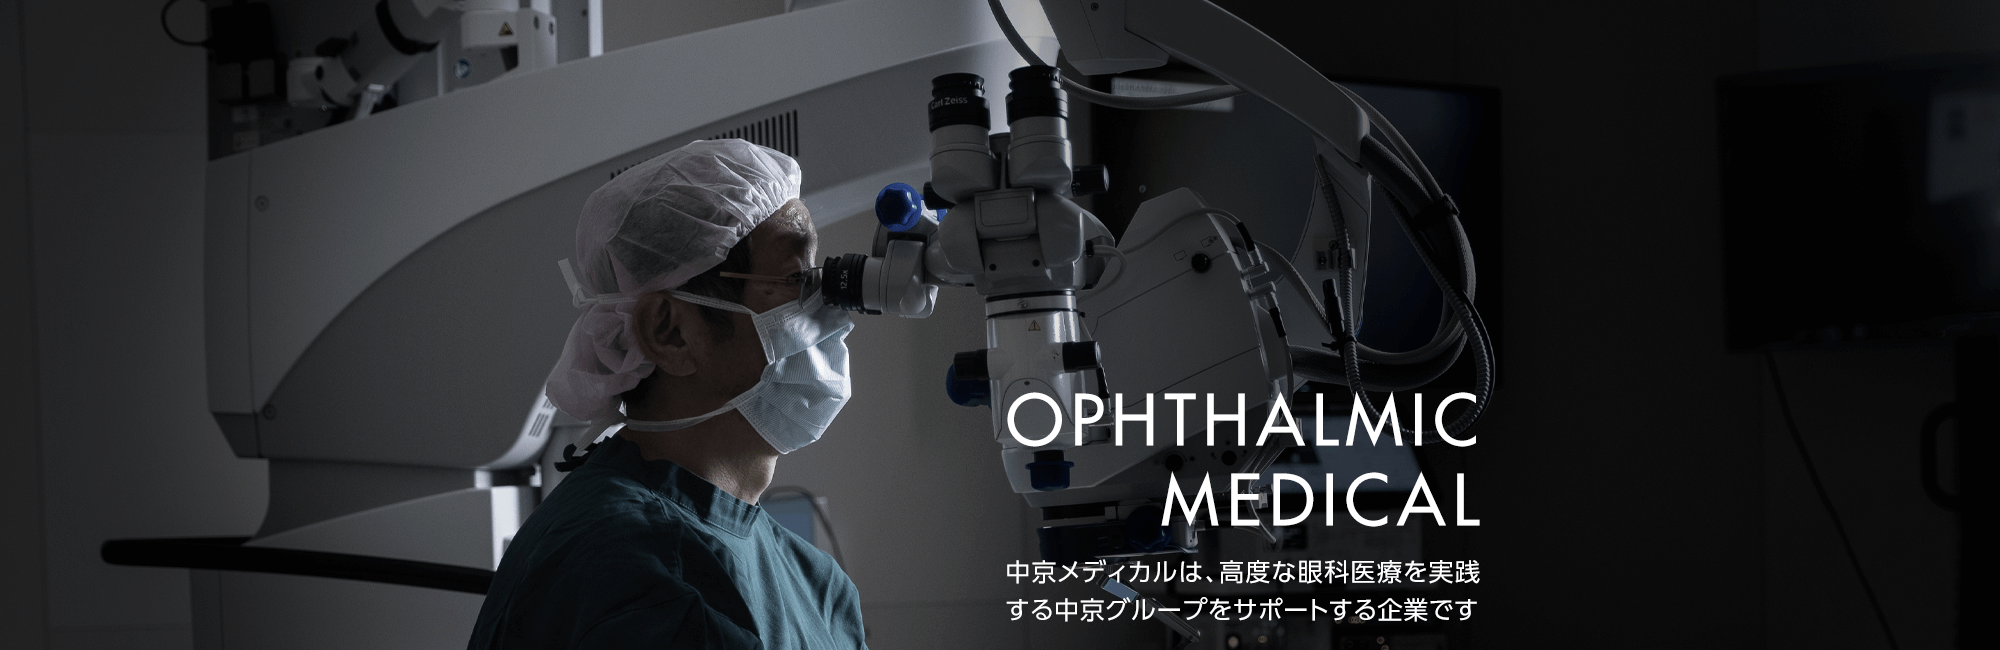 OPHTHALMIC MEDICAL 高度な眼科医療を実践する中京グループ その一翼を担う中京メディカル